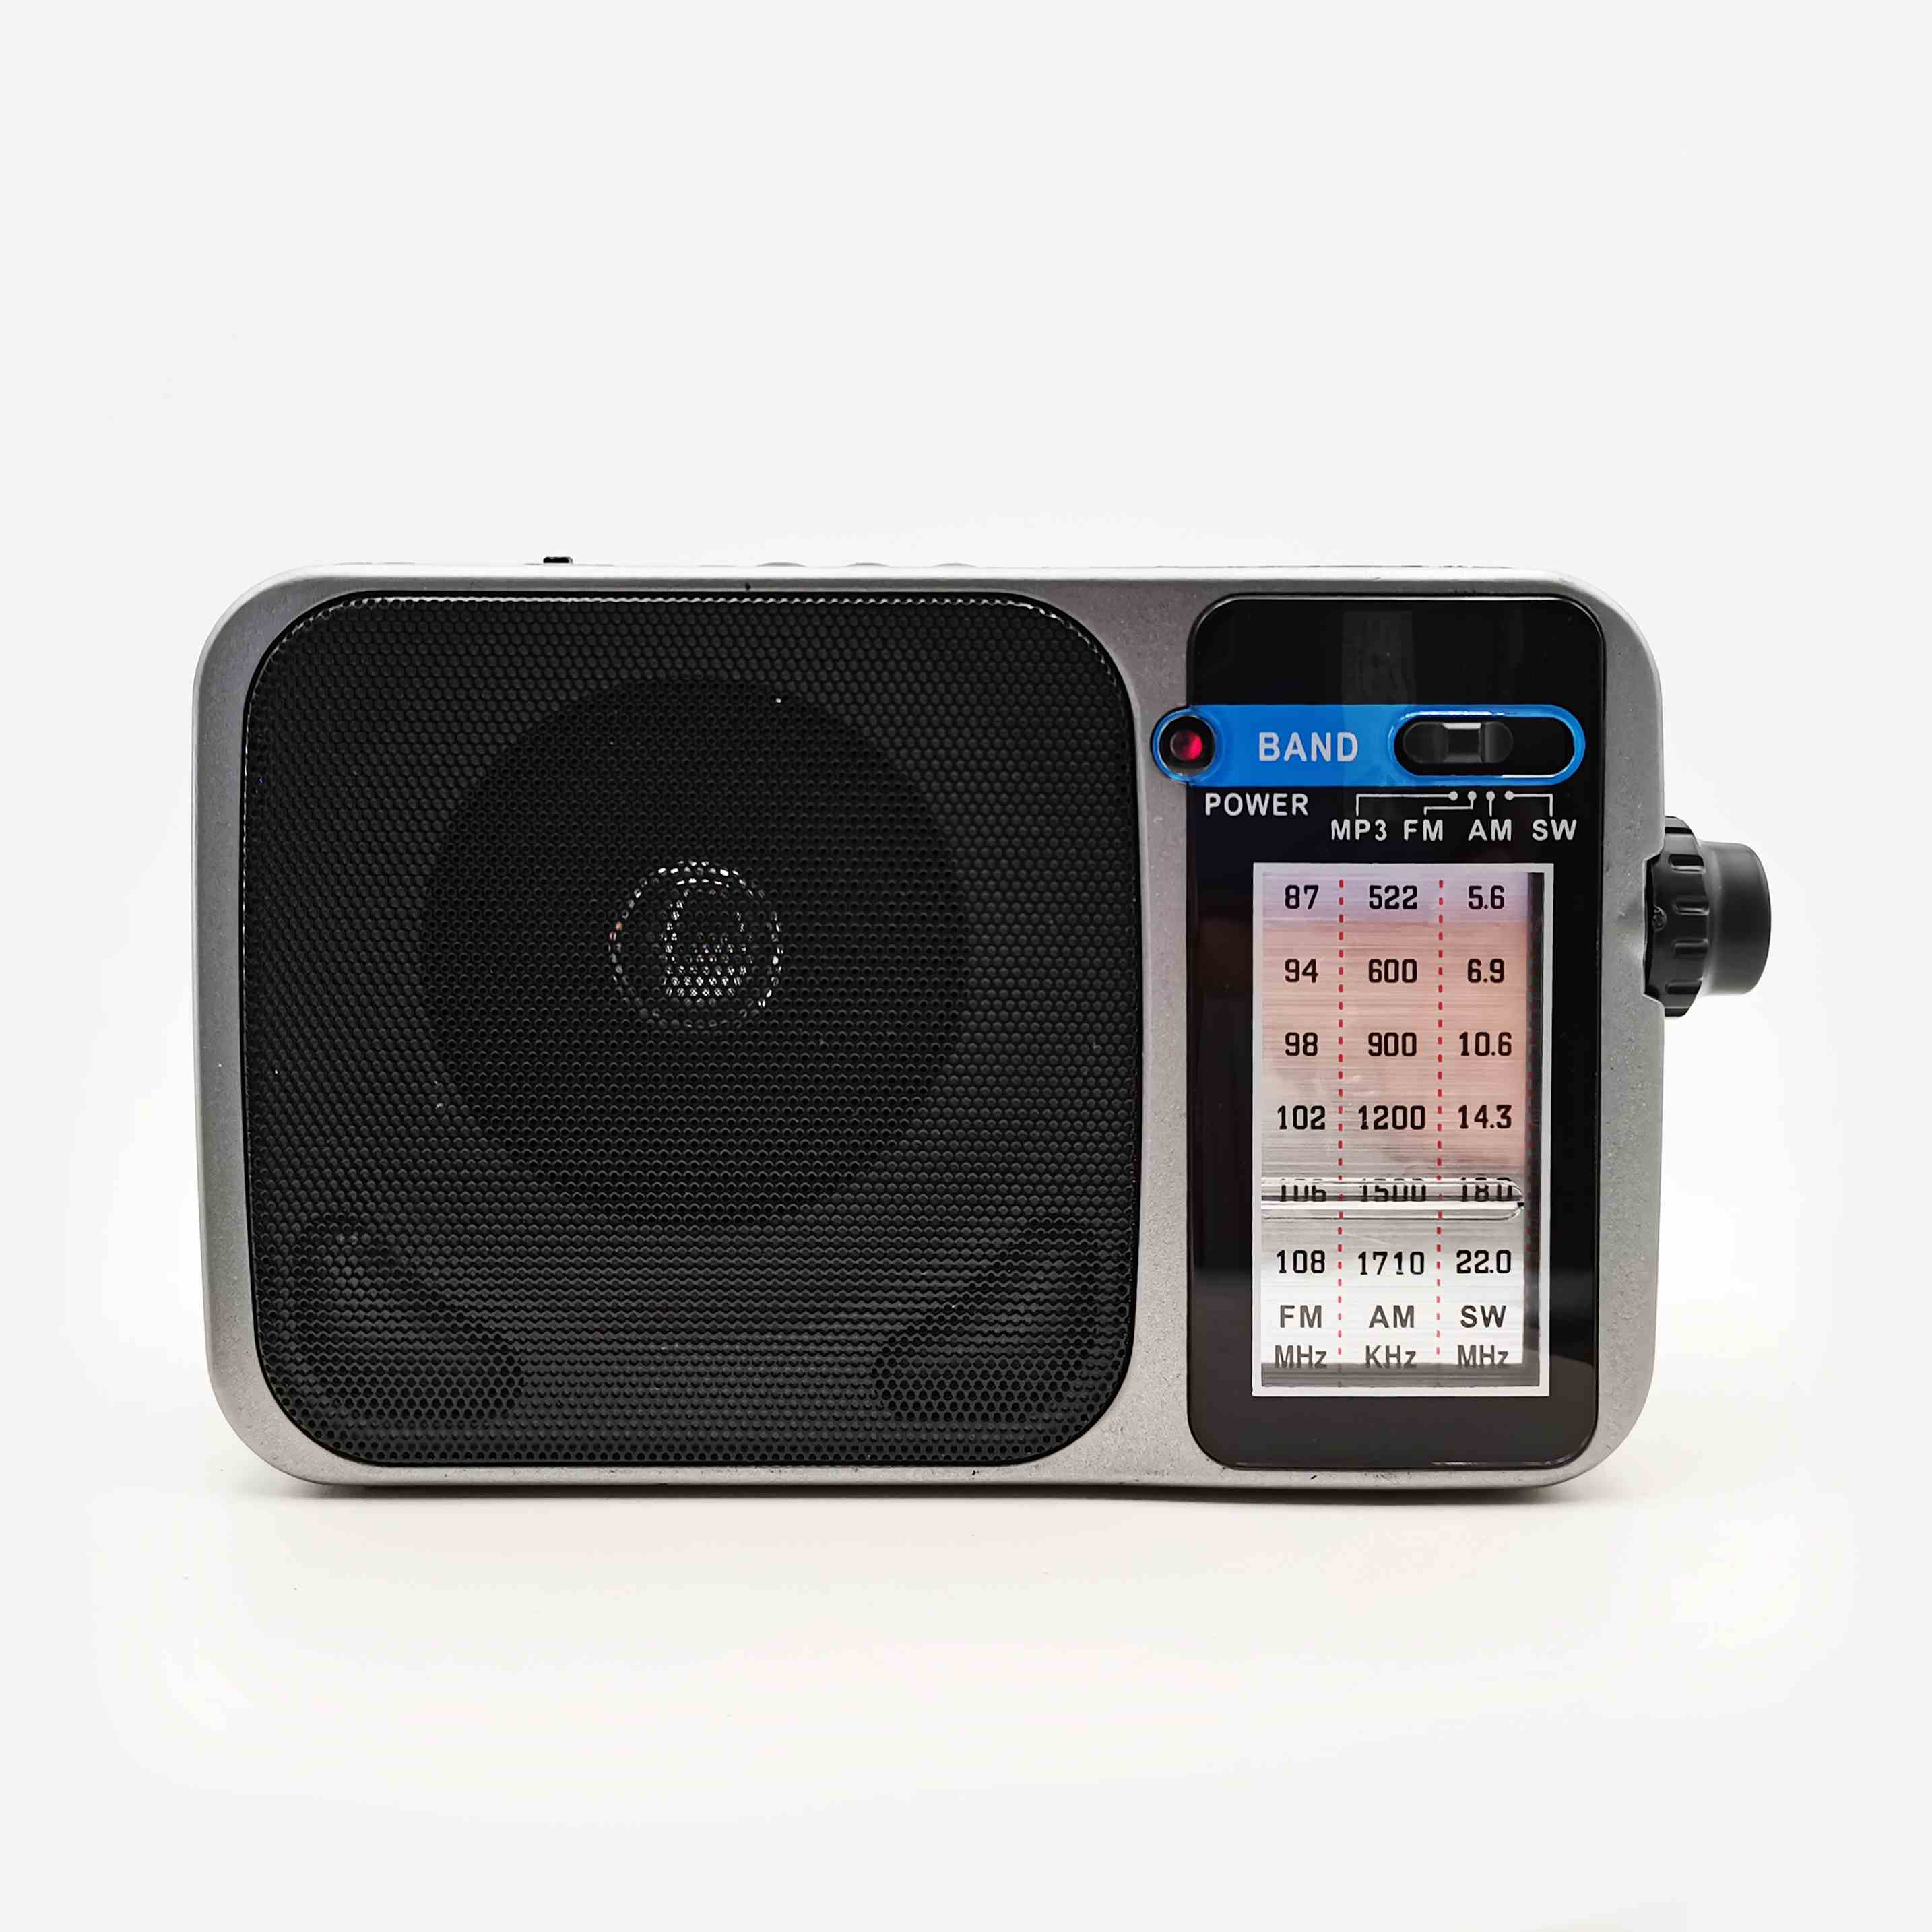 HS-2891 Hot Selling Portable Radio AM FM SW 3 Band Radio Support TF USB slot